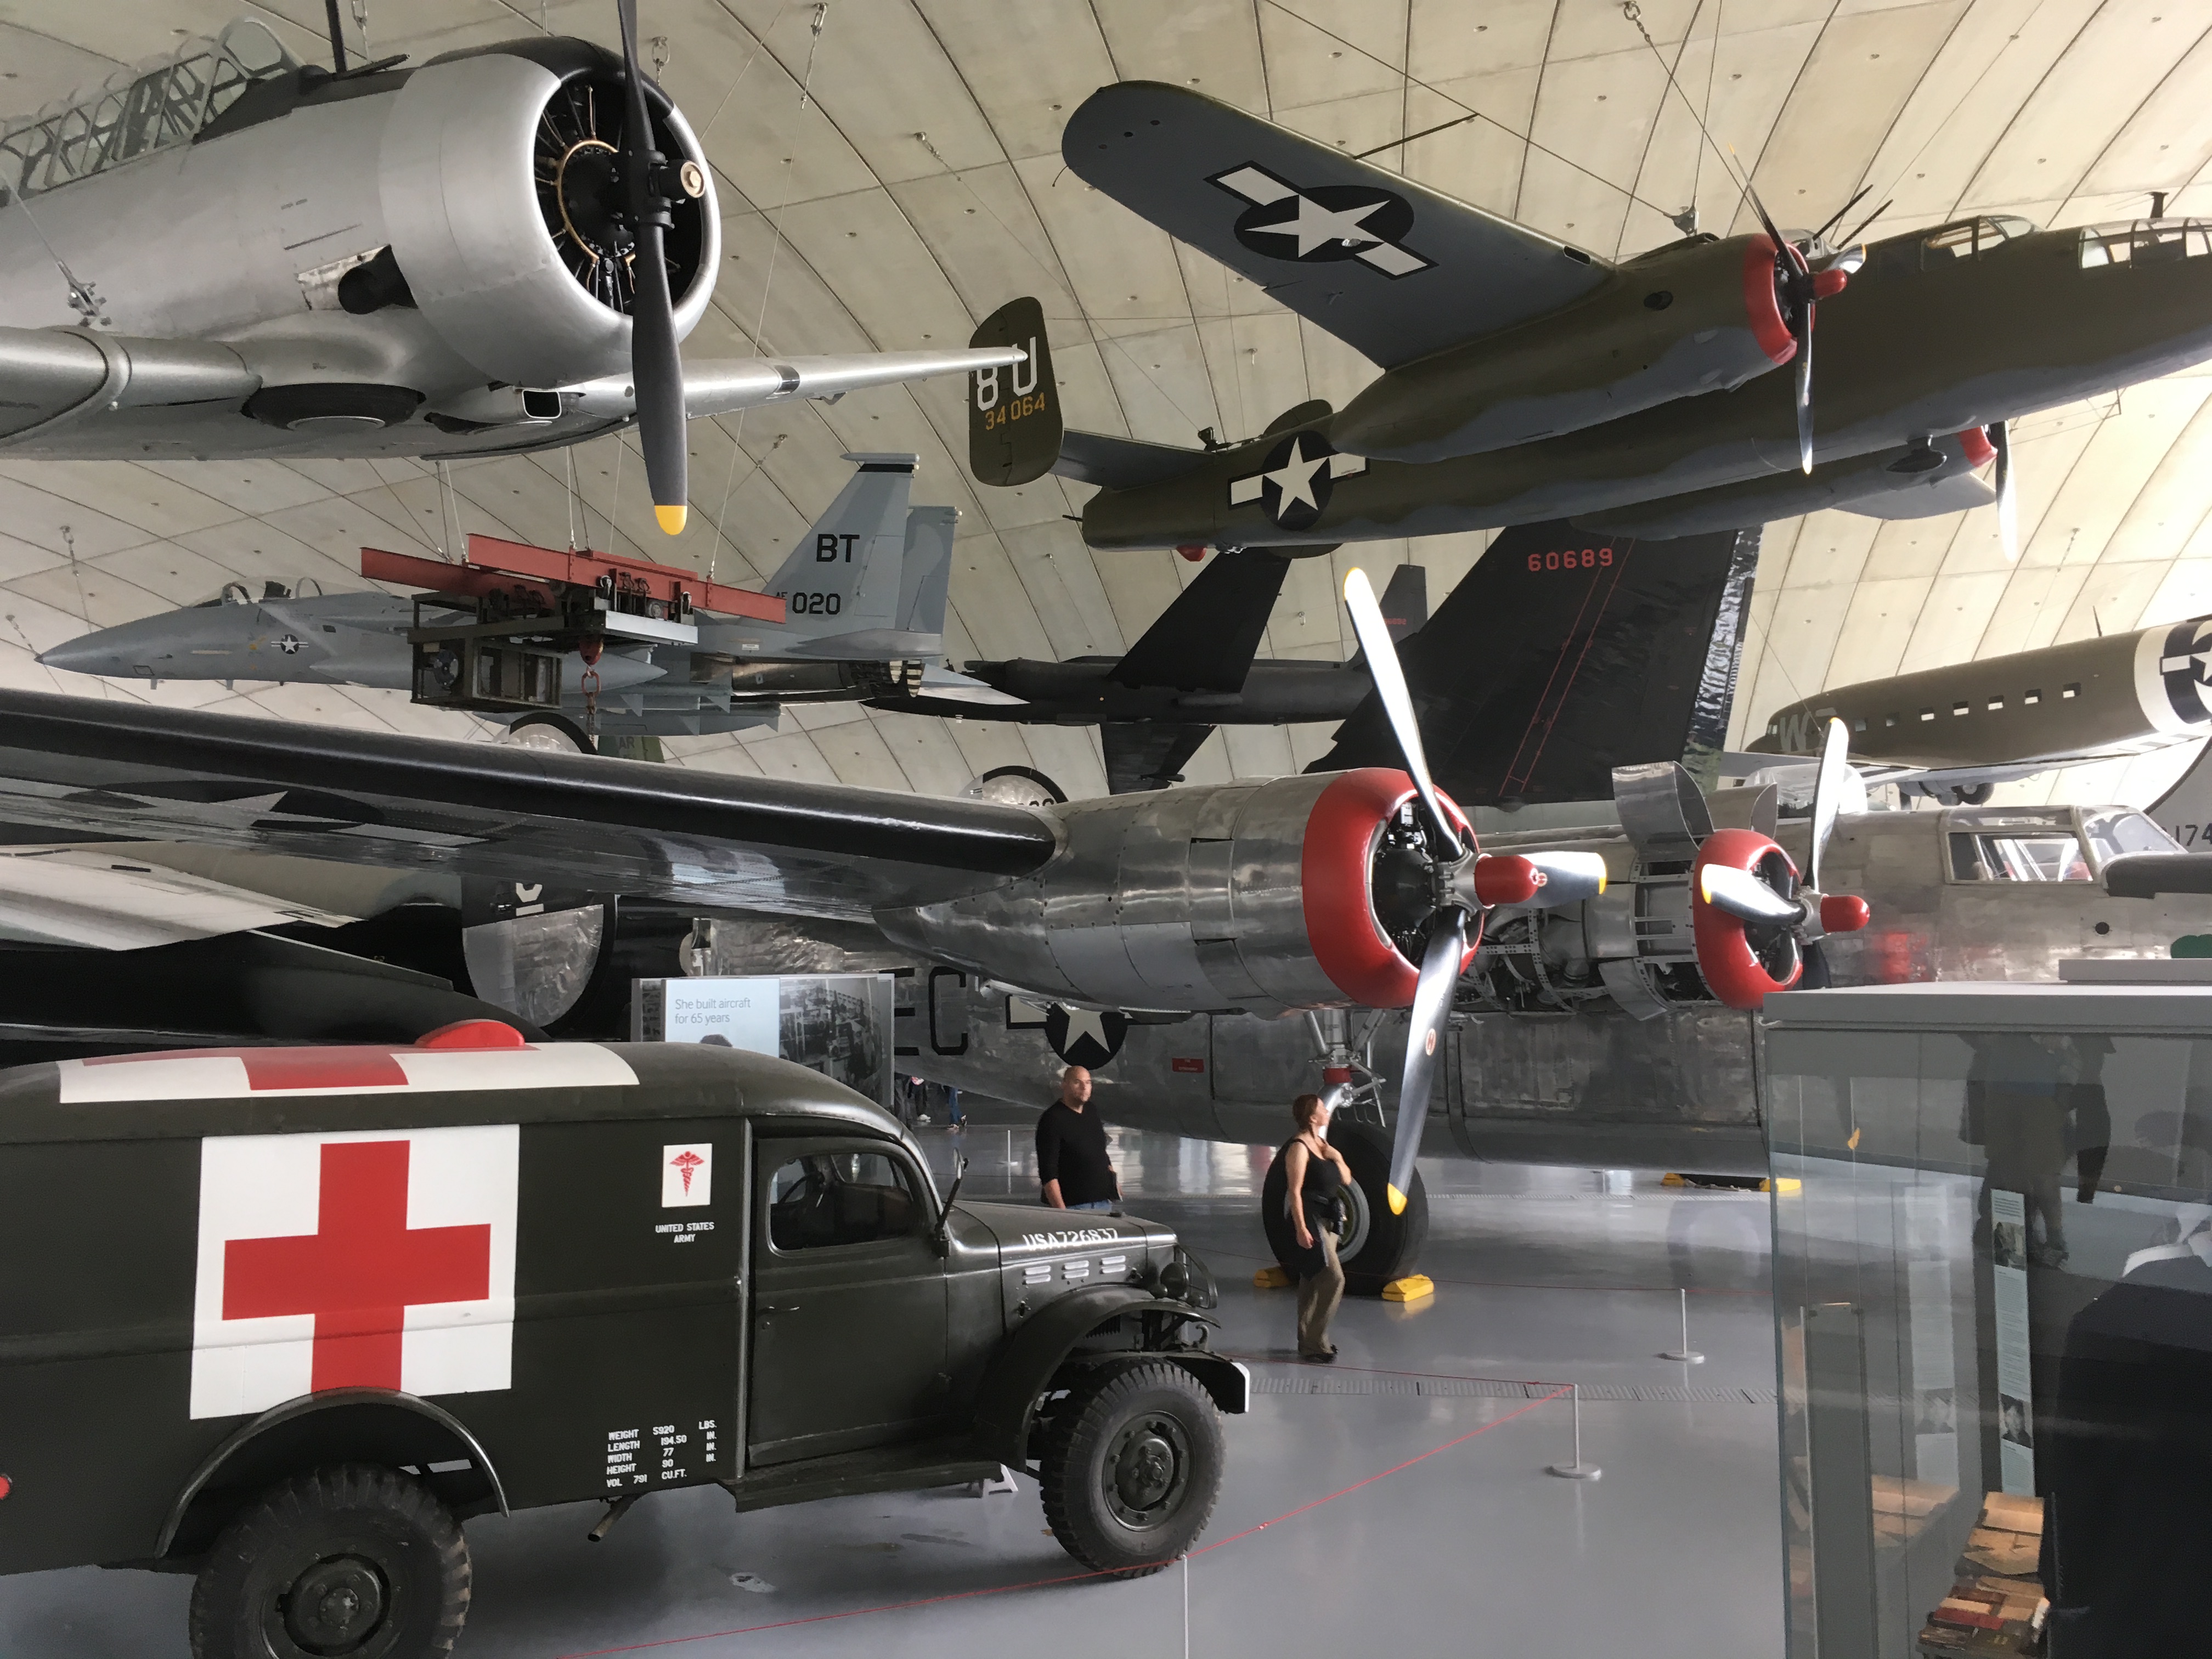 Duxford Imperial War Museum